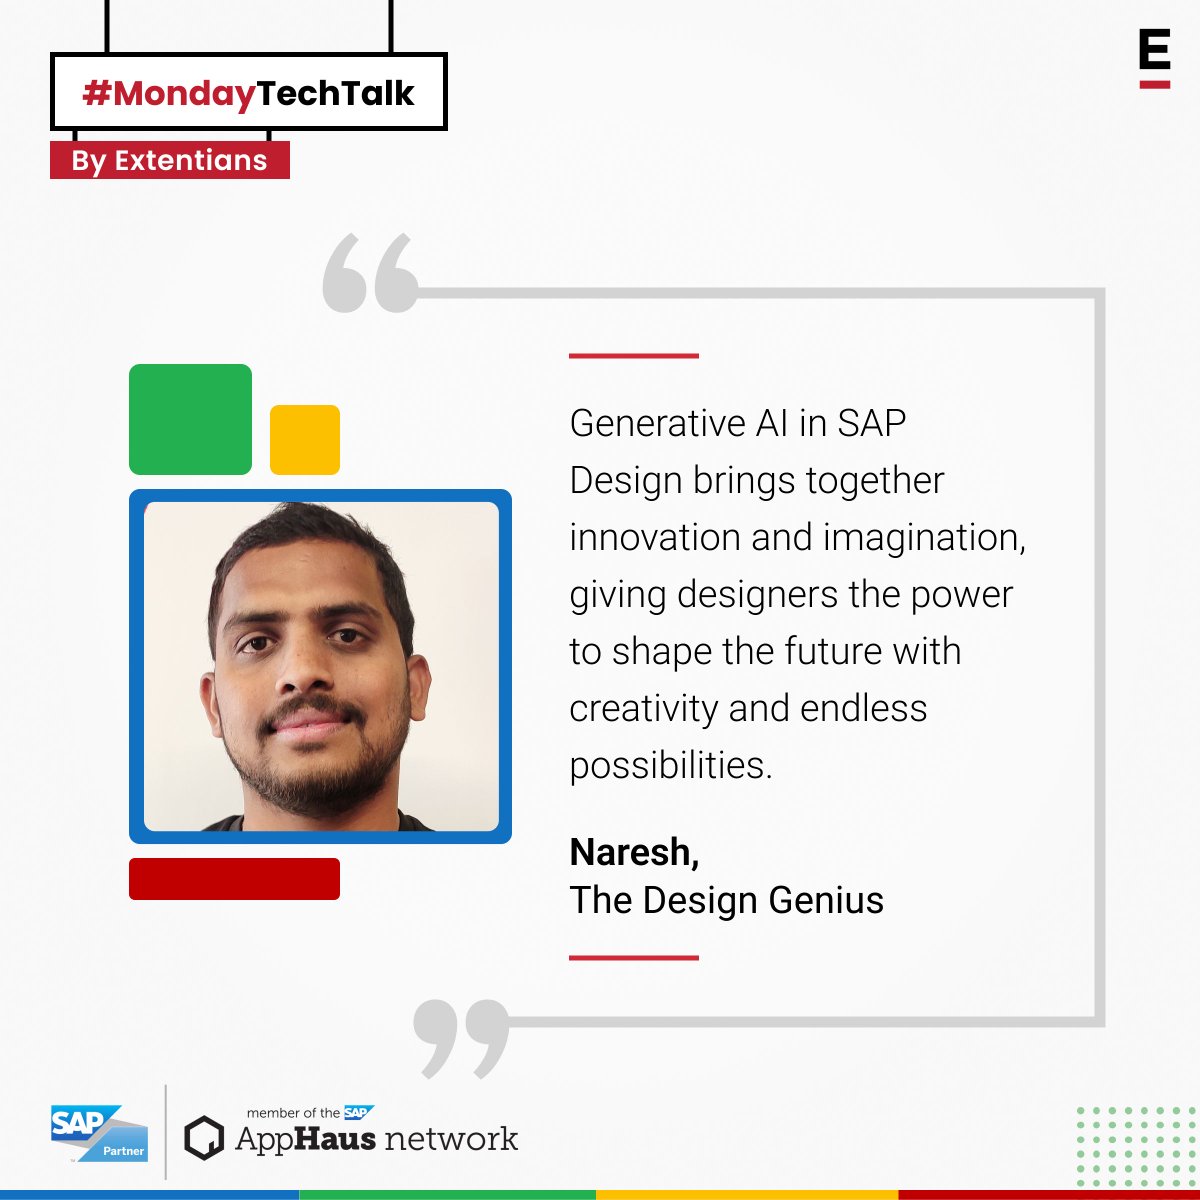 Unleashing creativity with Generative AI in SAP Design. 

#SAP #BusinessTechnologyPlatform #SAPAppHausNetwork #MondayTechTalkByExtentians #Extentia #DoMoreBeMore